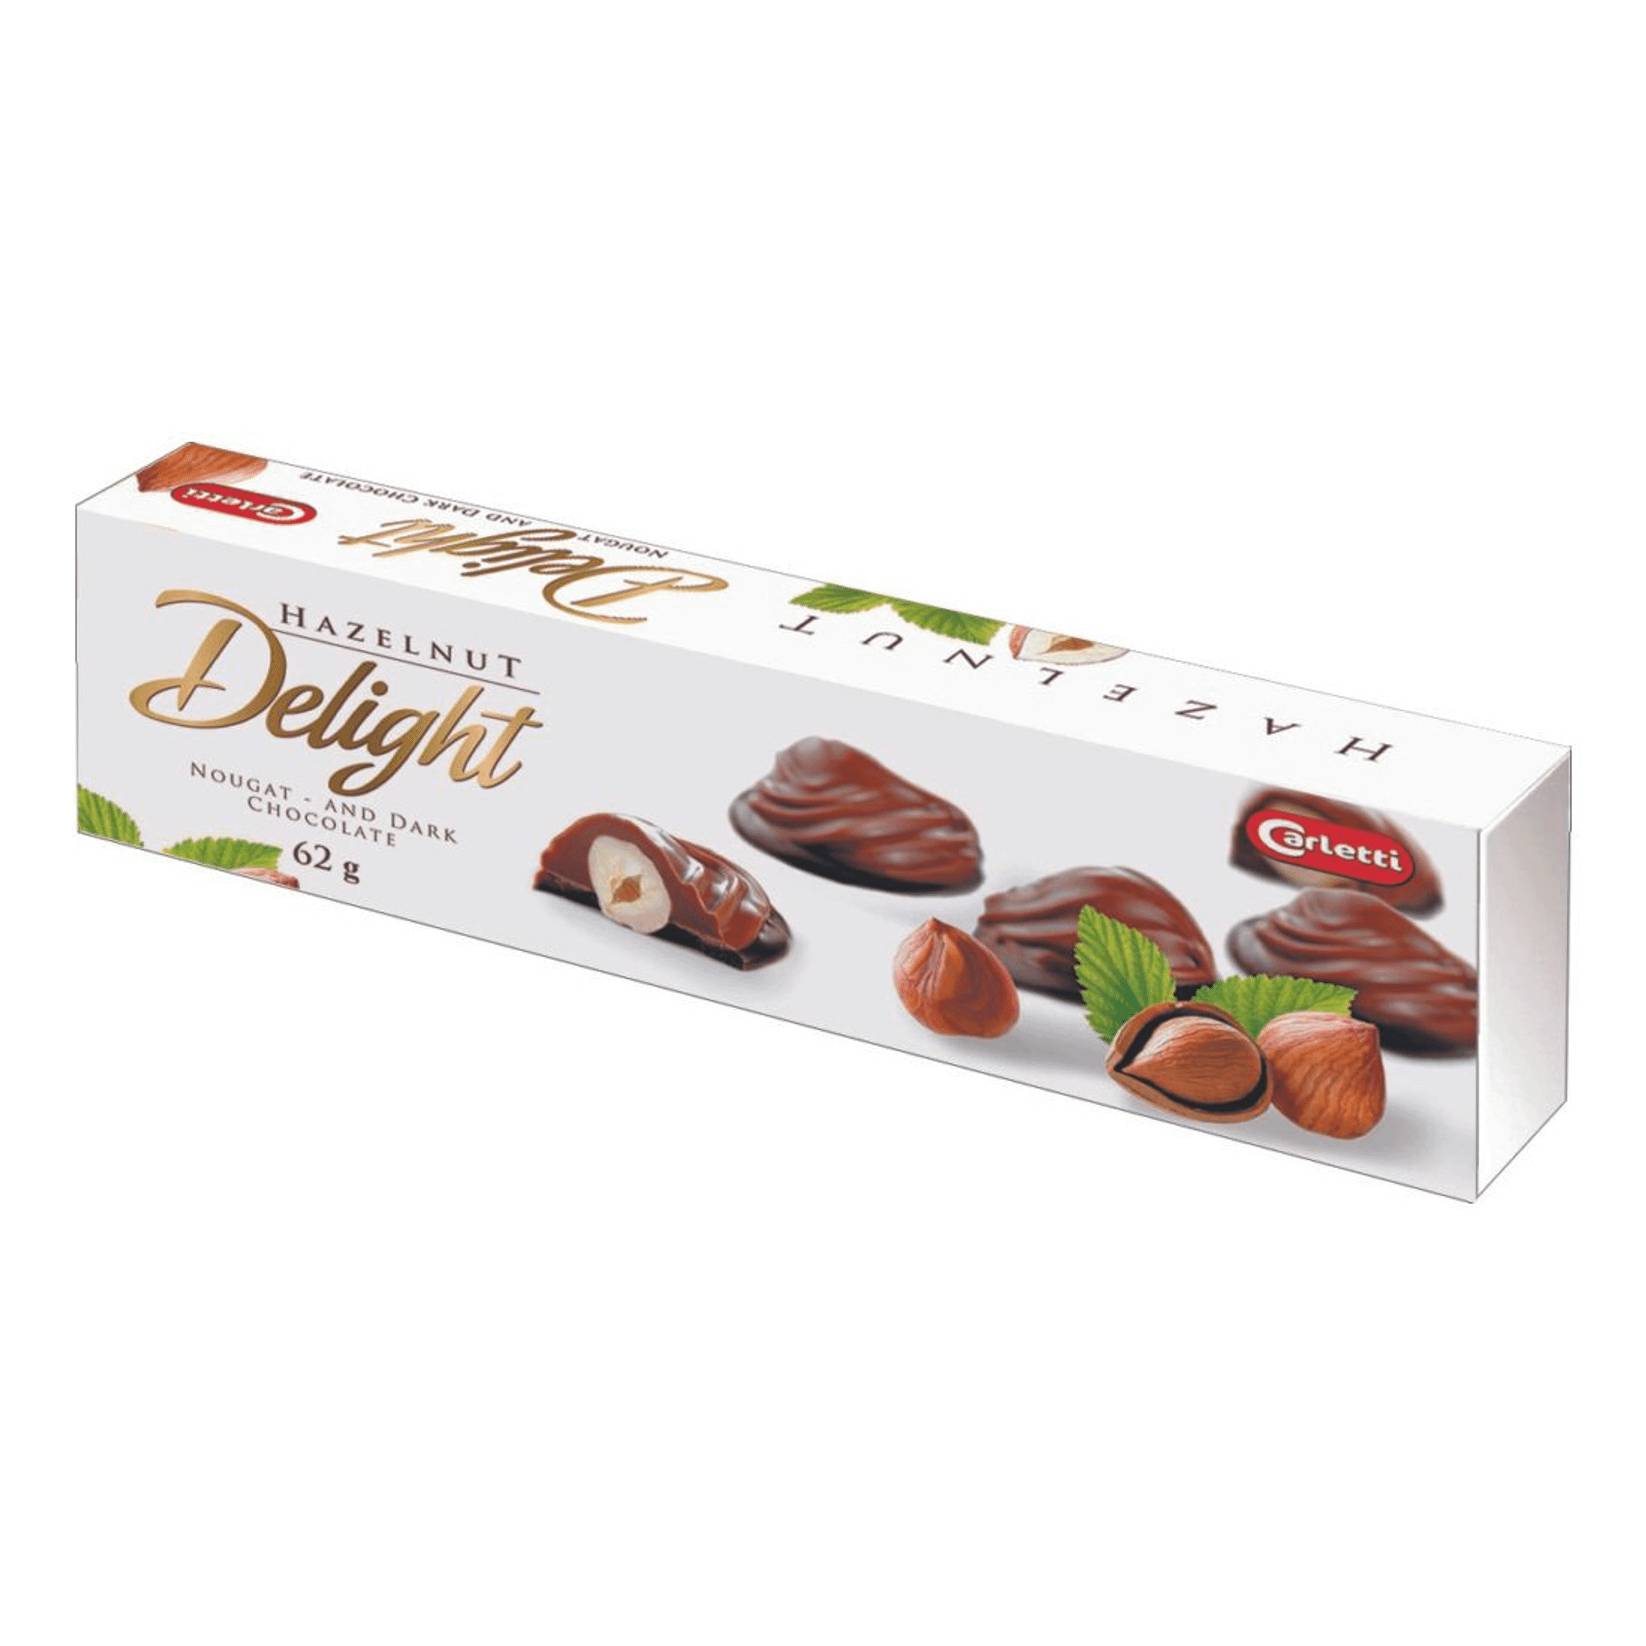 Набор шоколадный Carletti Hazelnut Delight, 62 г коробка складная под 16 конфет белая 17 7 х 17 7 х 3 8 см